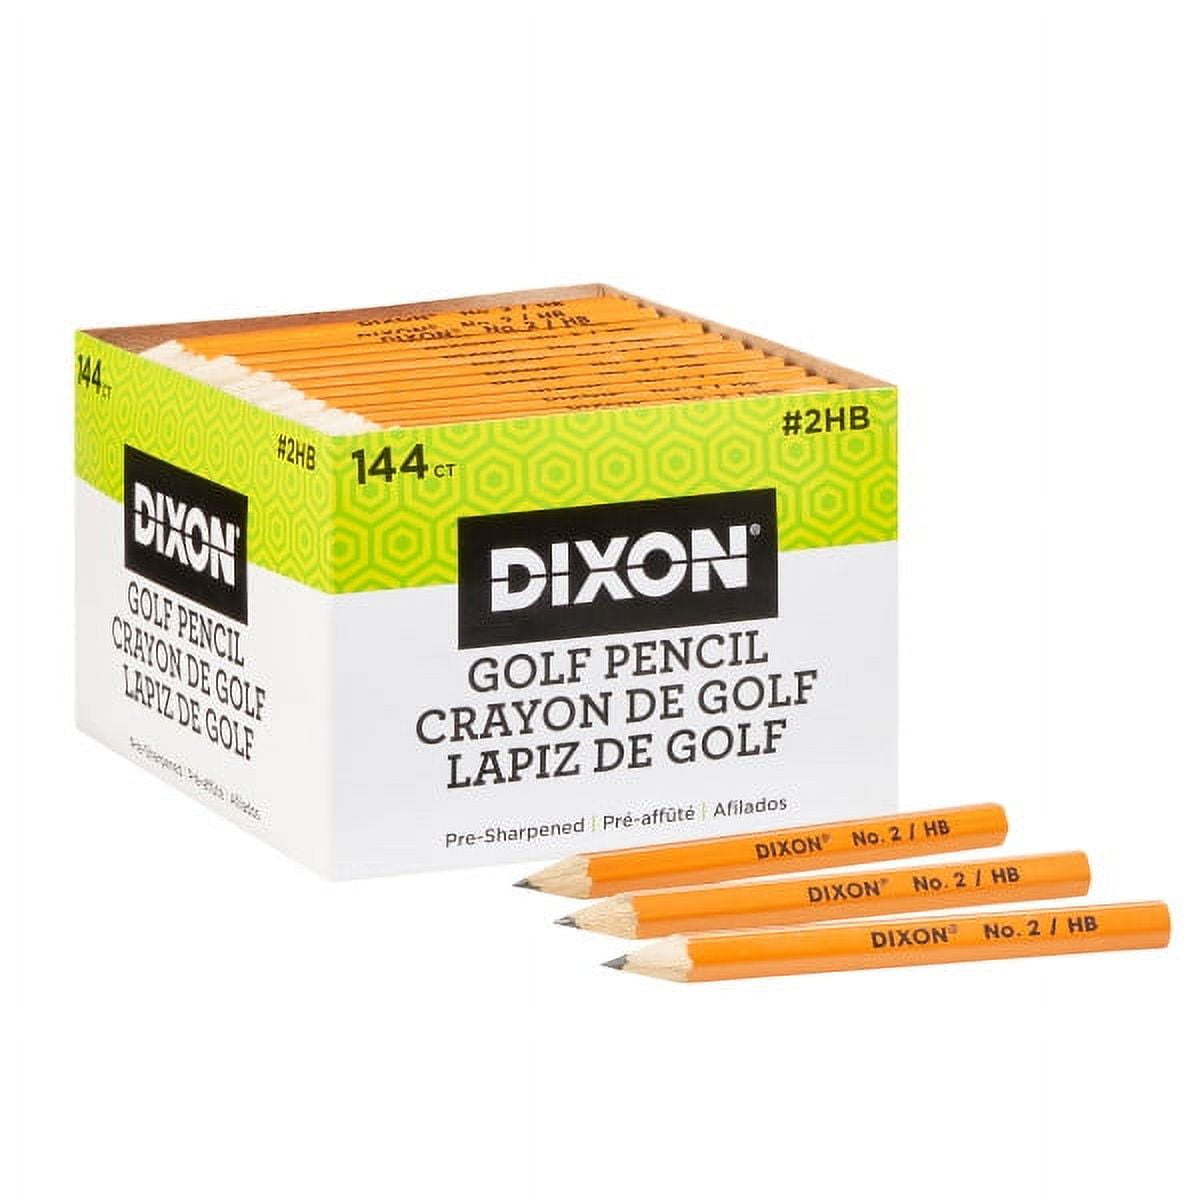 Dixon Ticonderoga Beginner Pencil with Eraser